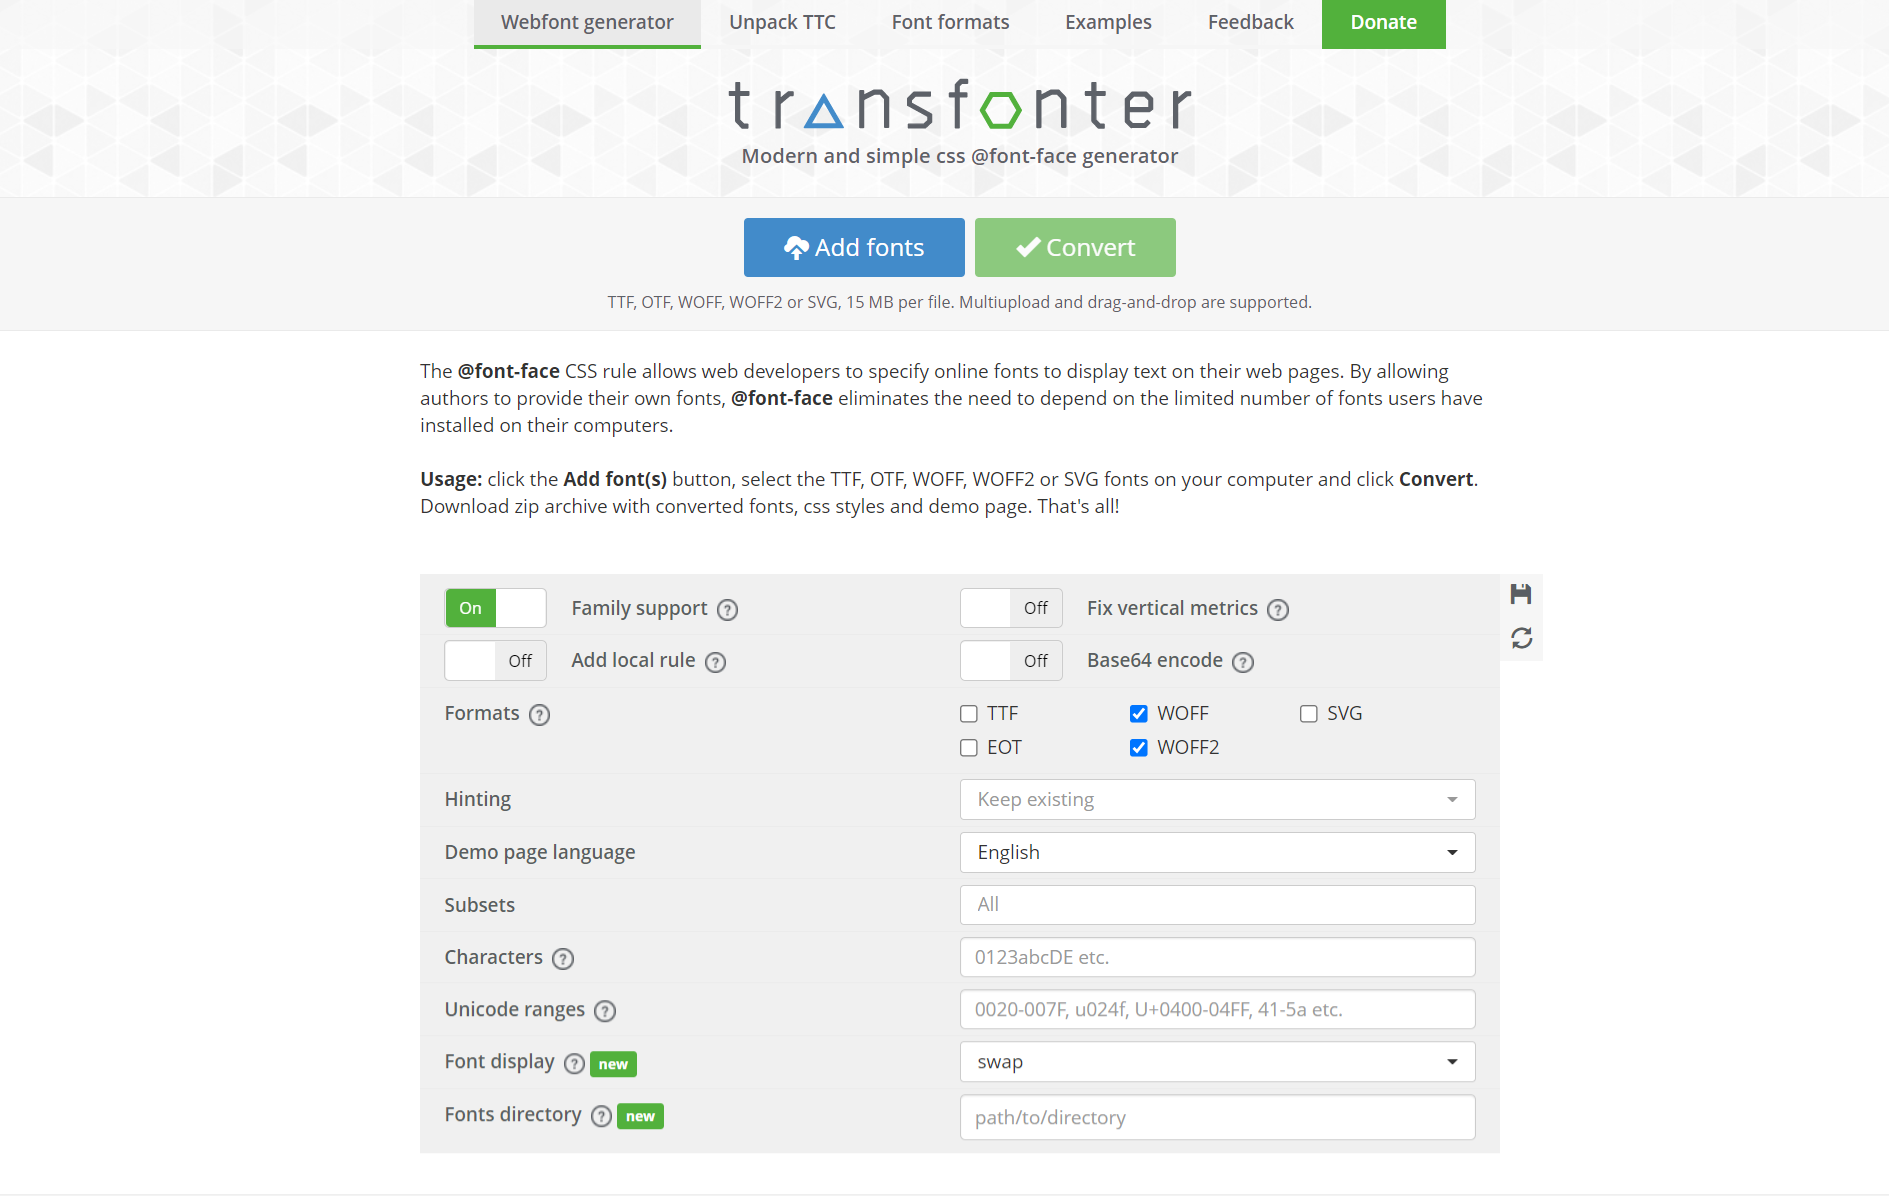 Online font face generator Transfonter